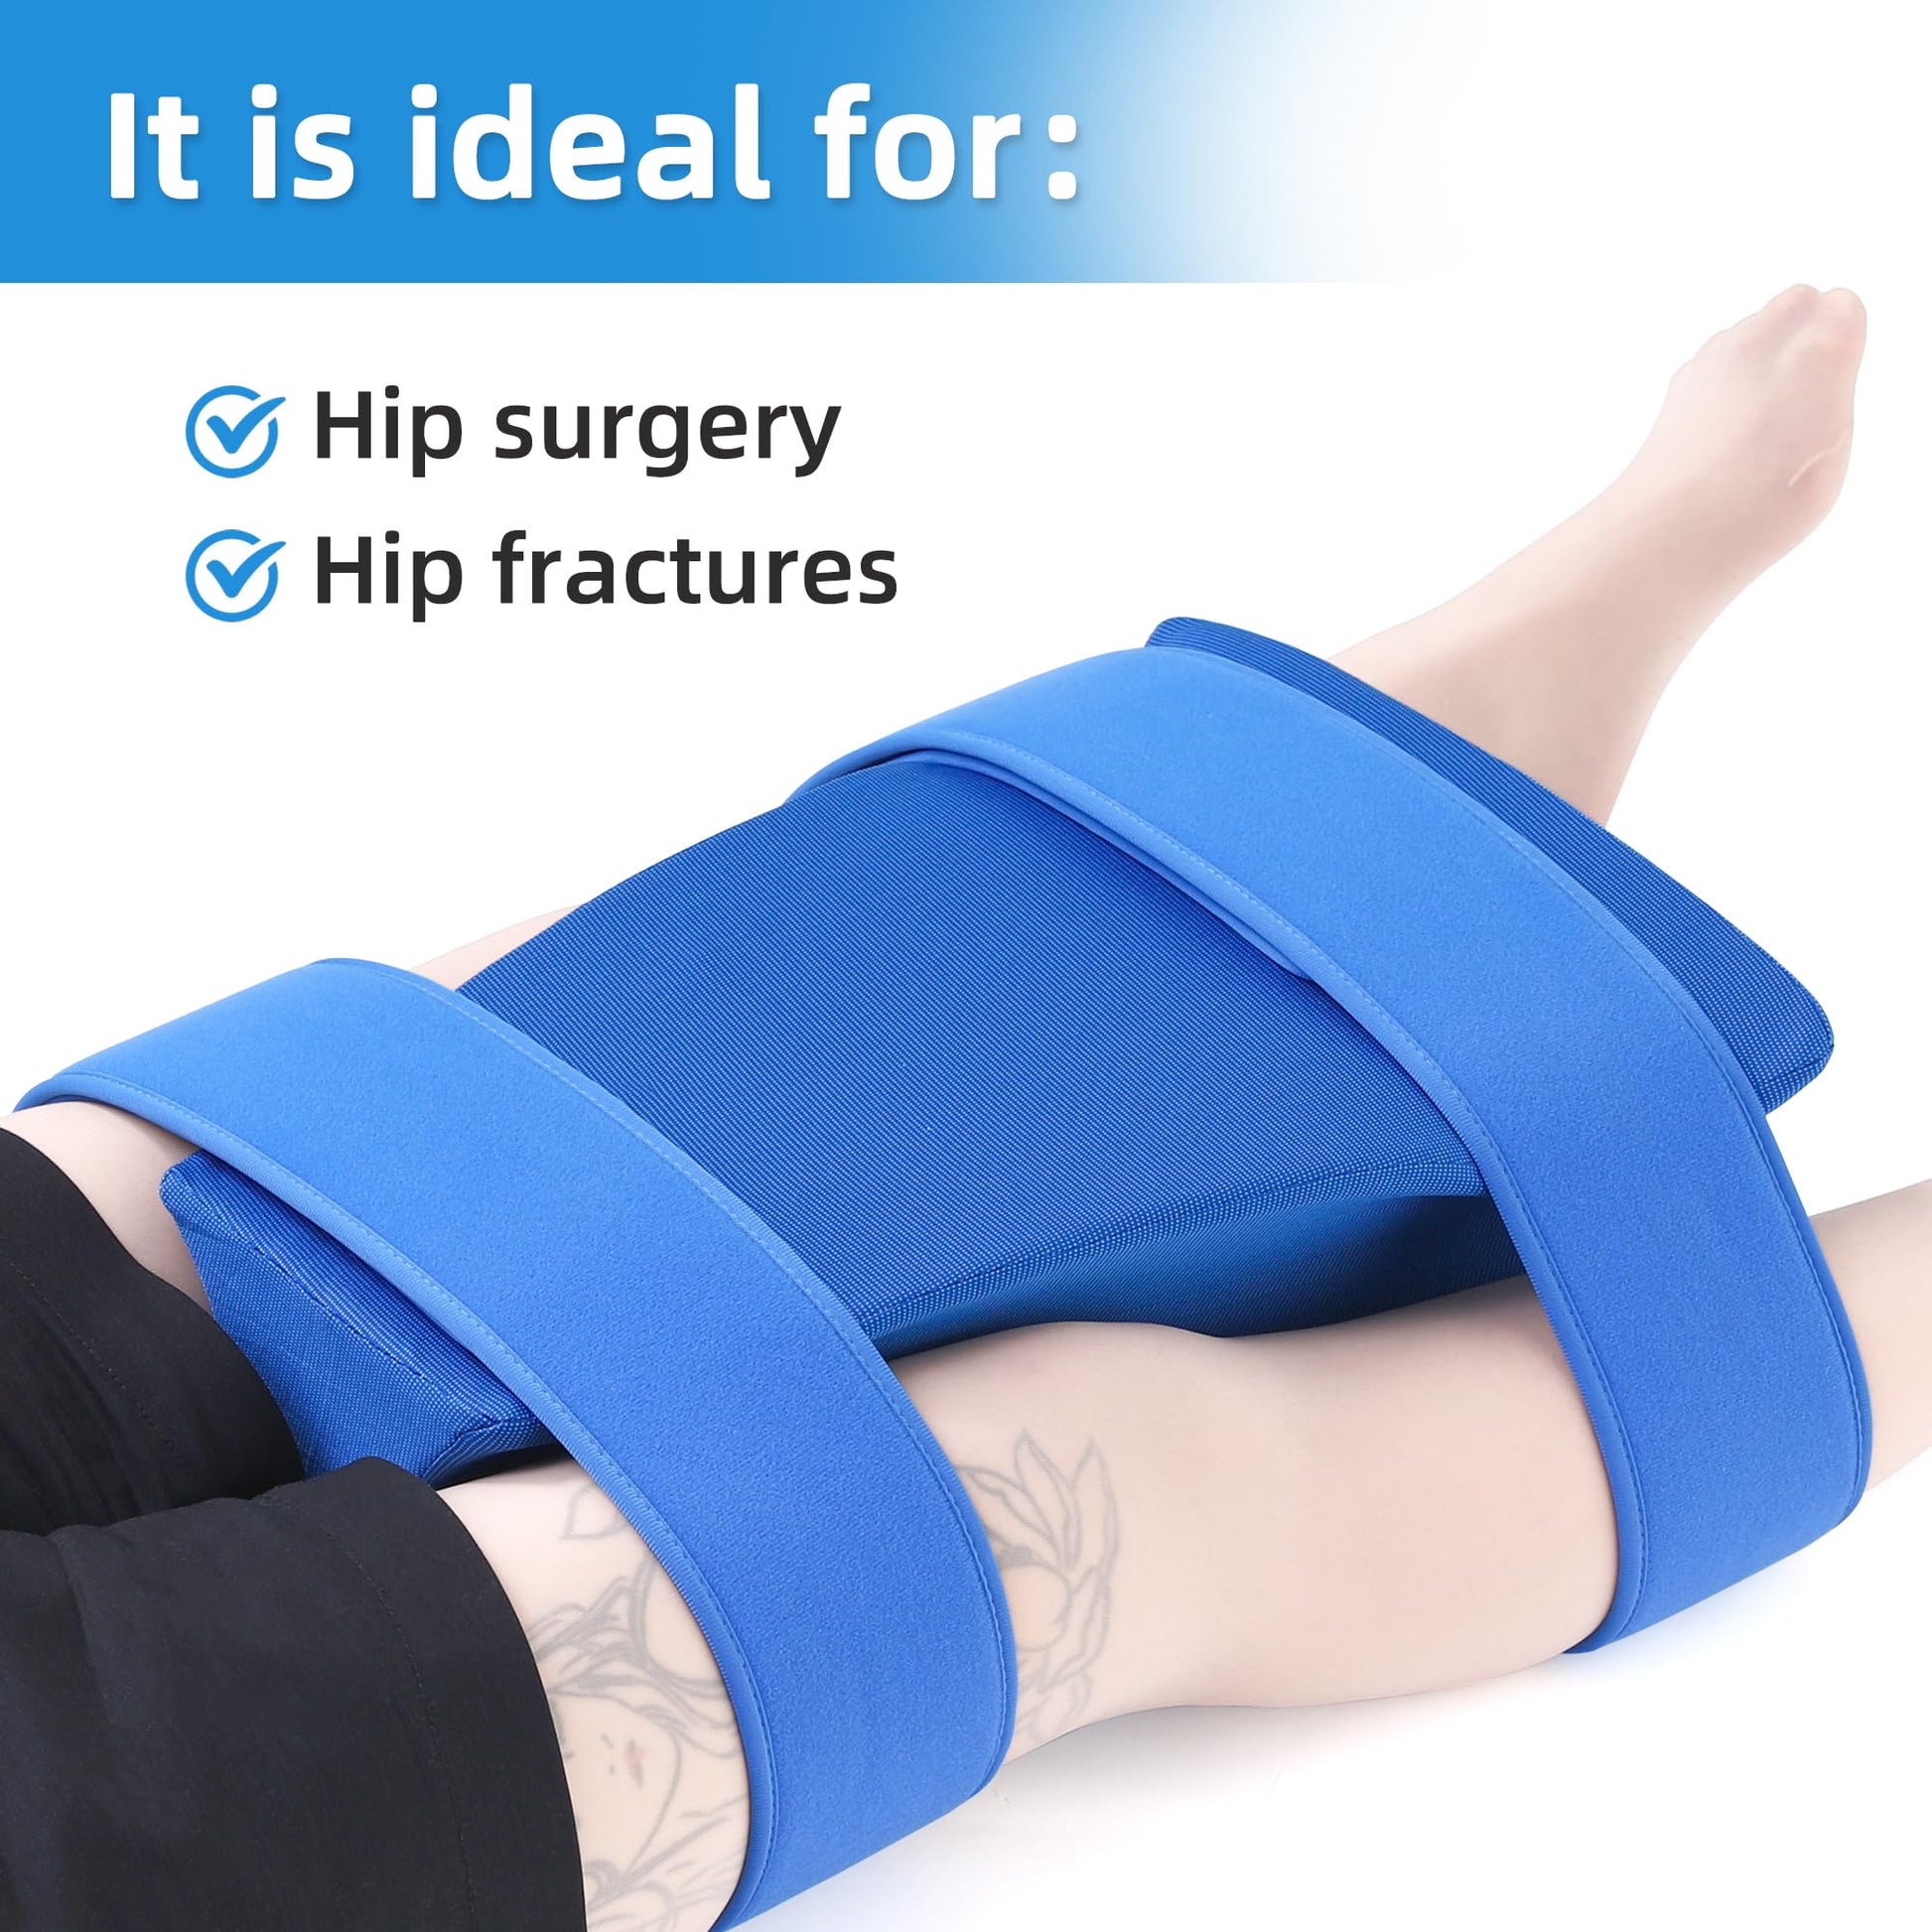 Hip Abduction Pillows Assure Greater Patient Comfort after Hip Surgery